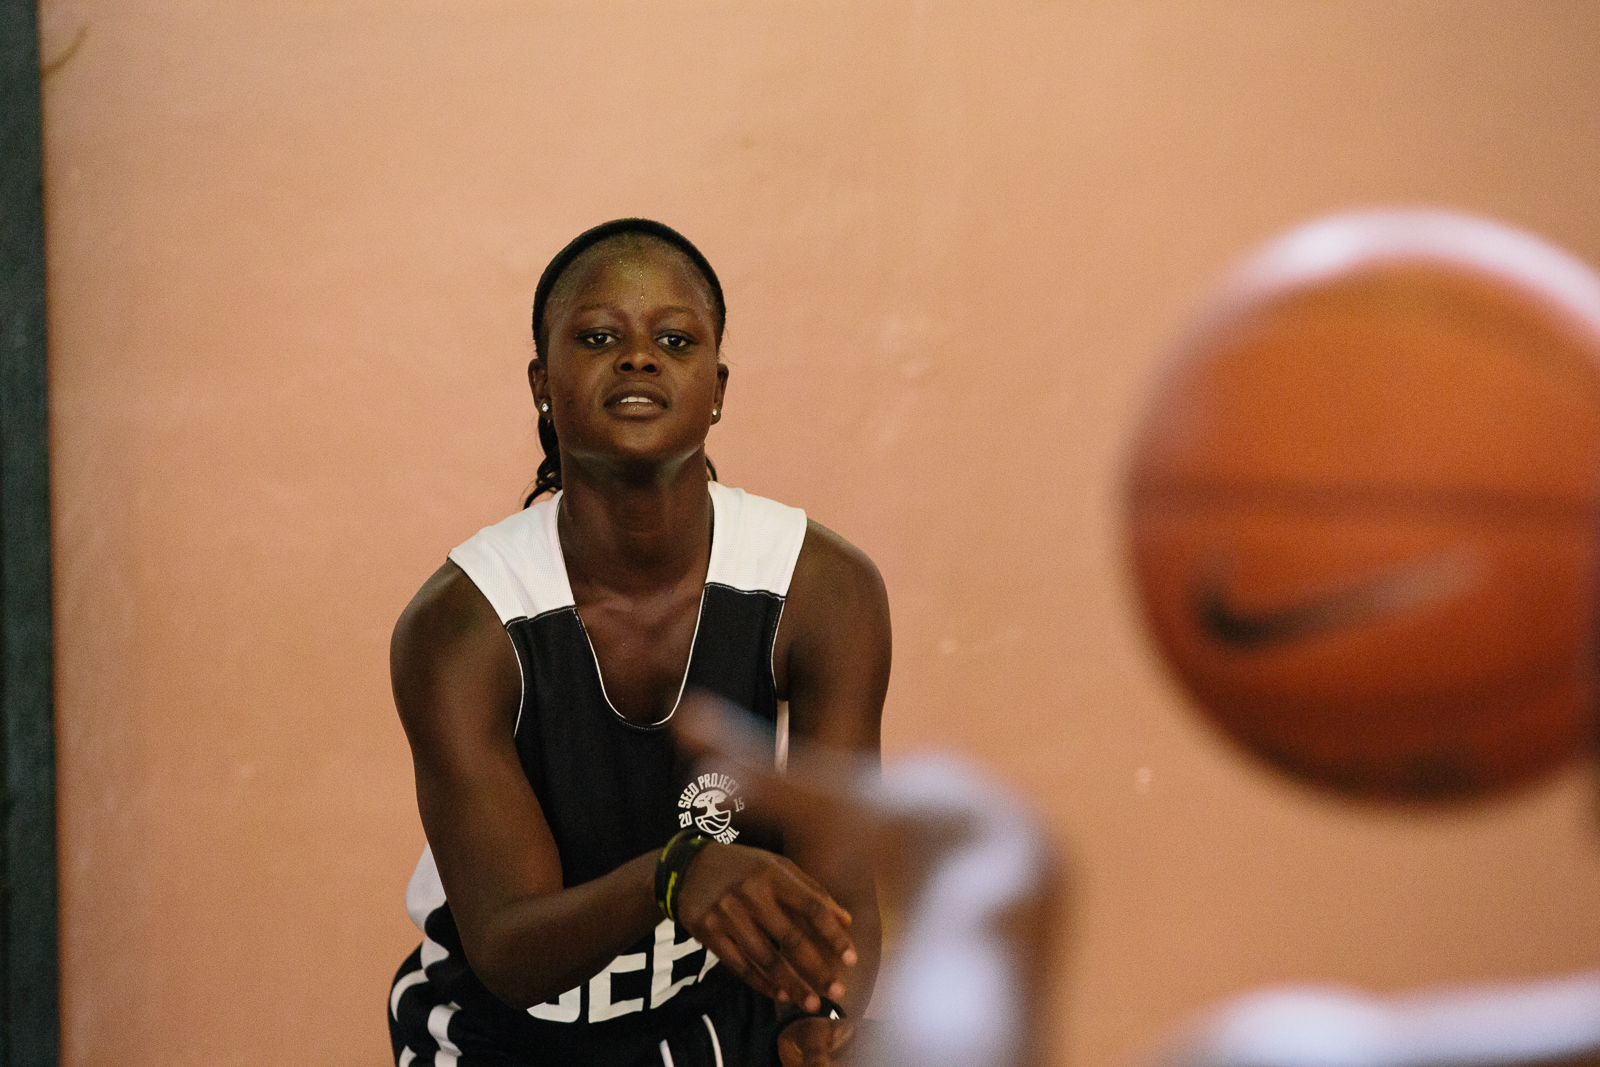 401_20150601_Seed Girls Training_thiès_Senegal©KevinCouliau.jpg